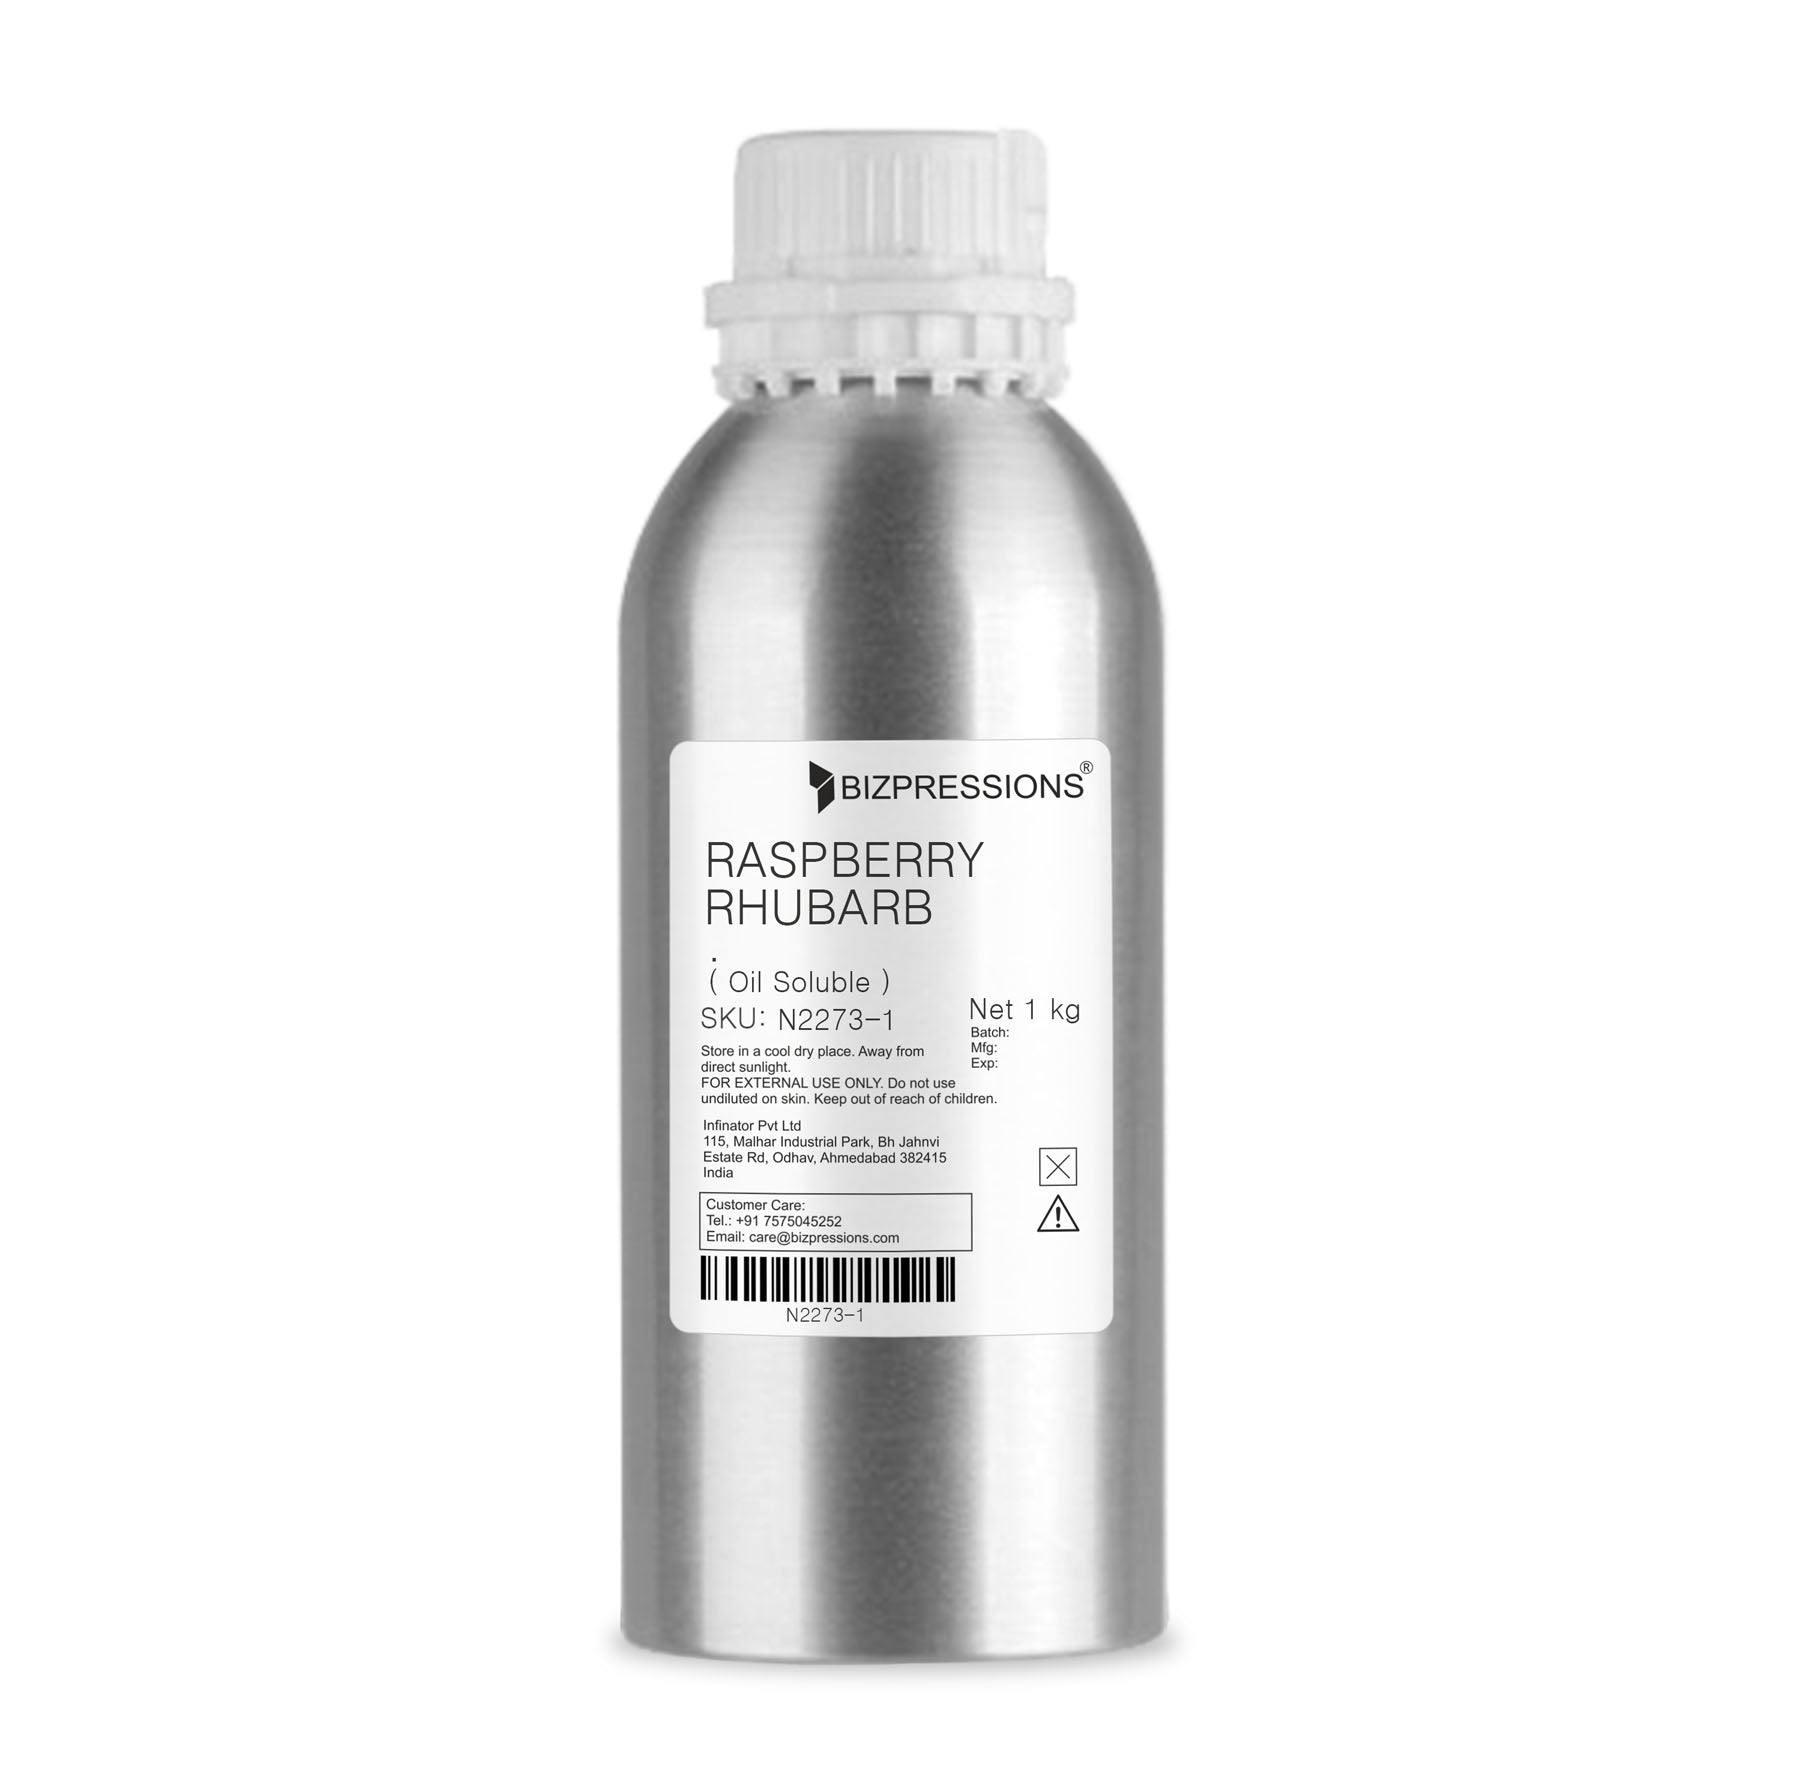 RASPBERRY RHUBARB - Fragrance ( Oil Soluble ) - 1 kg